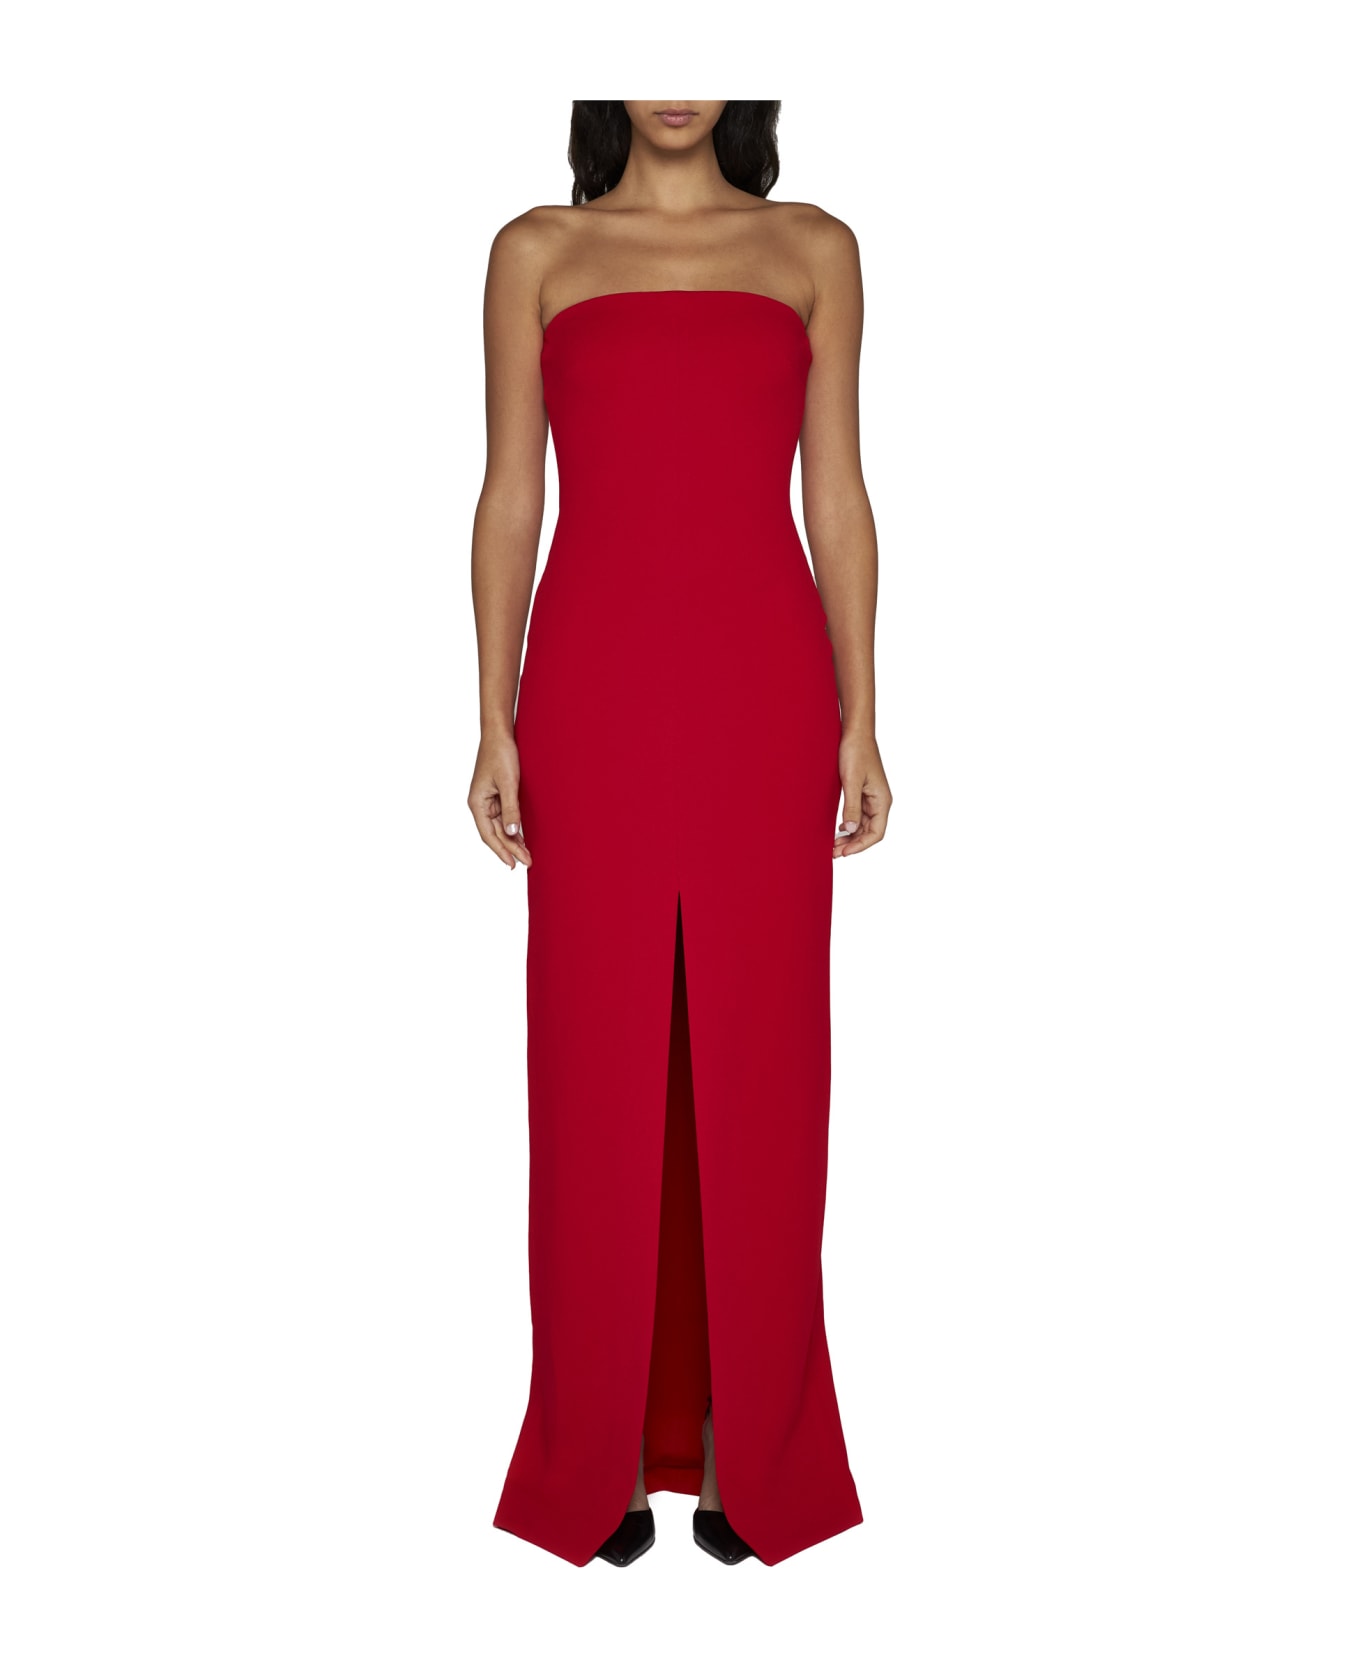 Solace London Dress - Red ジャンプスーツ